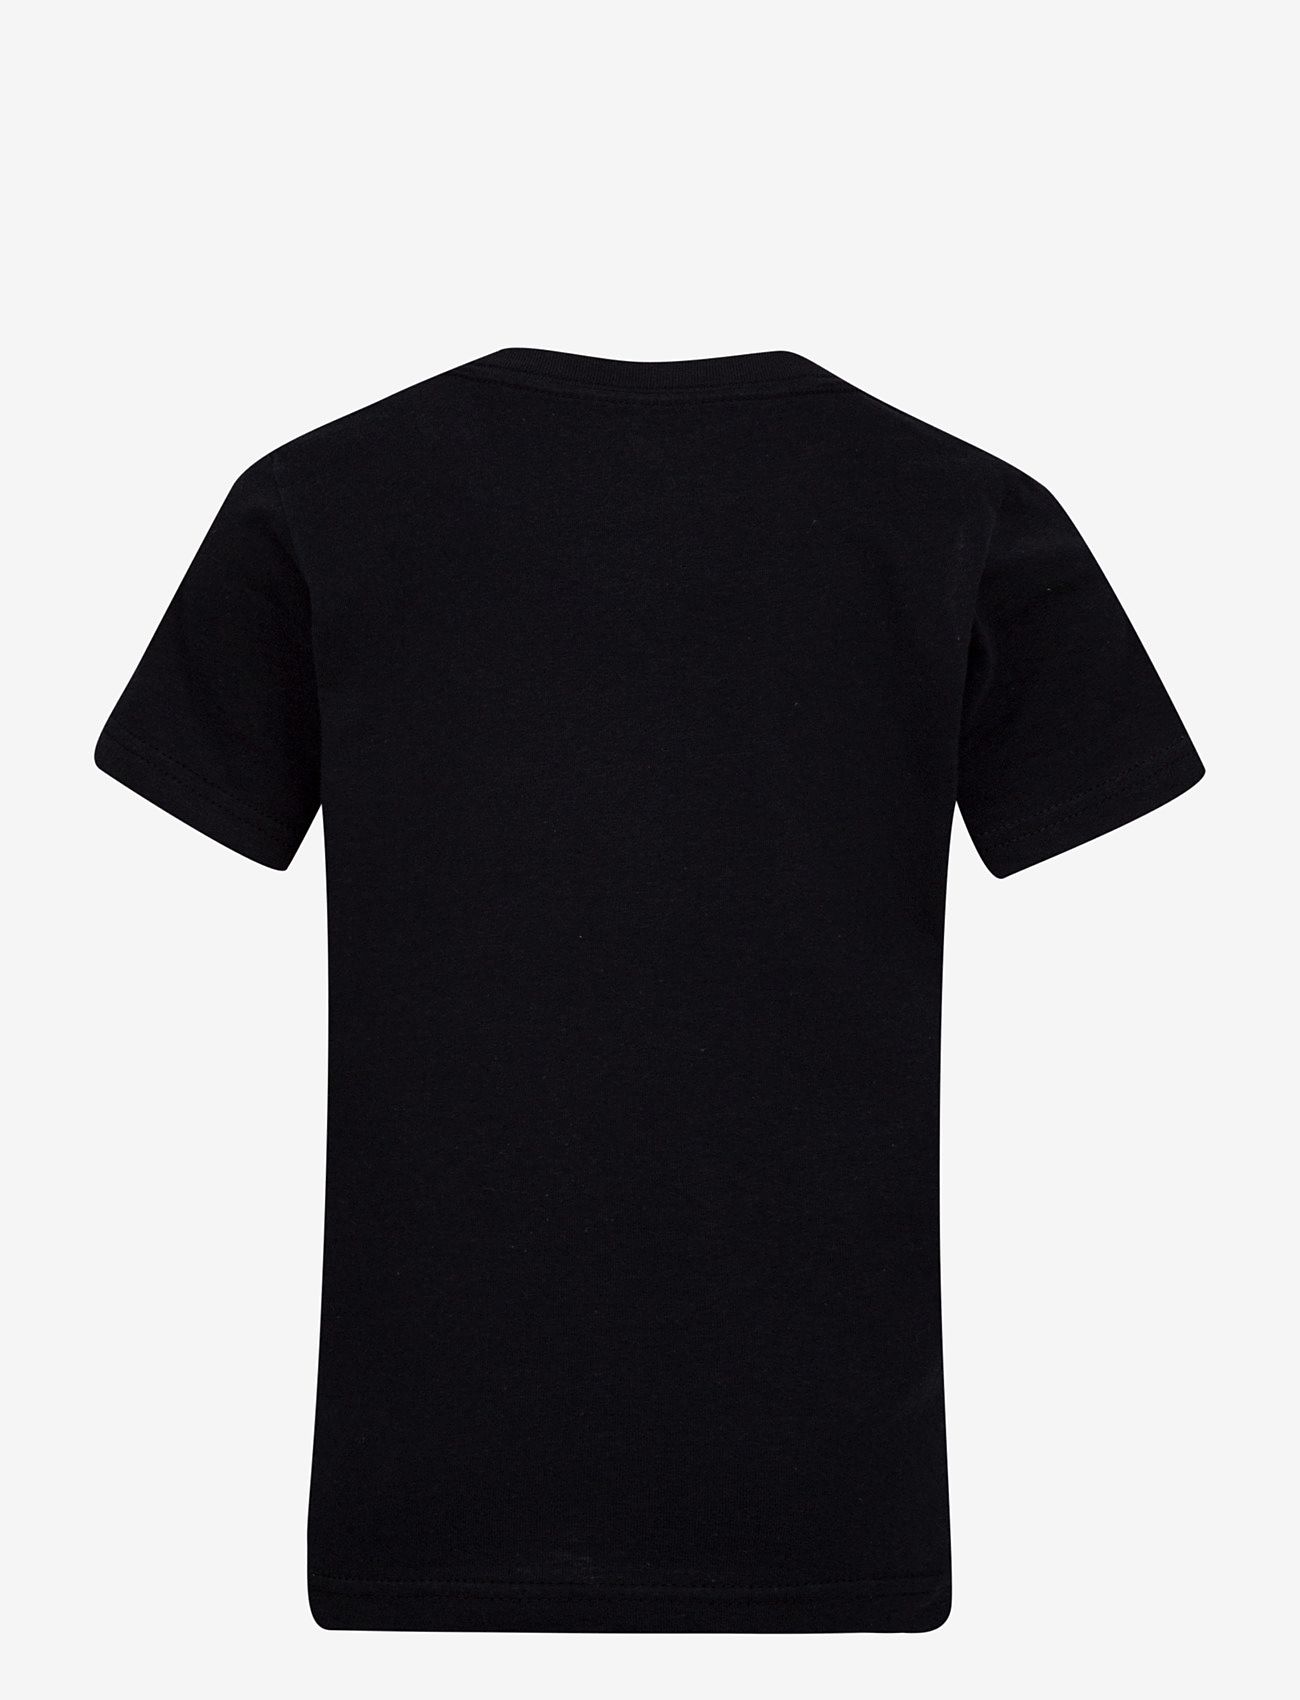 Nike - NKB NIKE FUTURA SS TEE - pattern short-sleeved t-shirt - black - 1